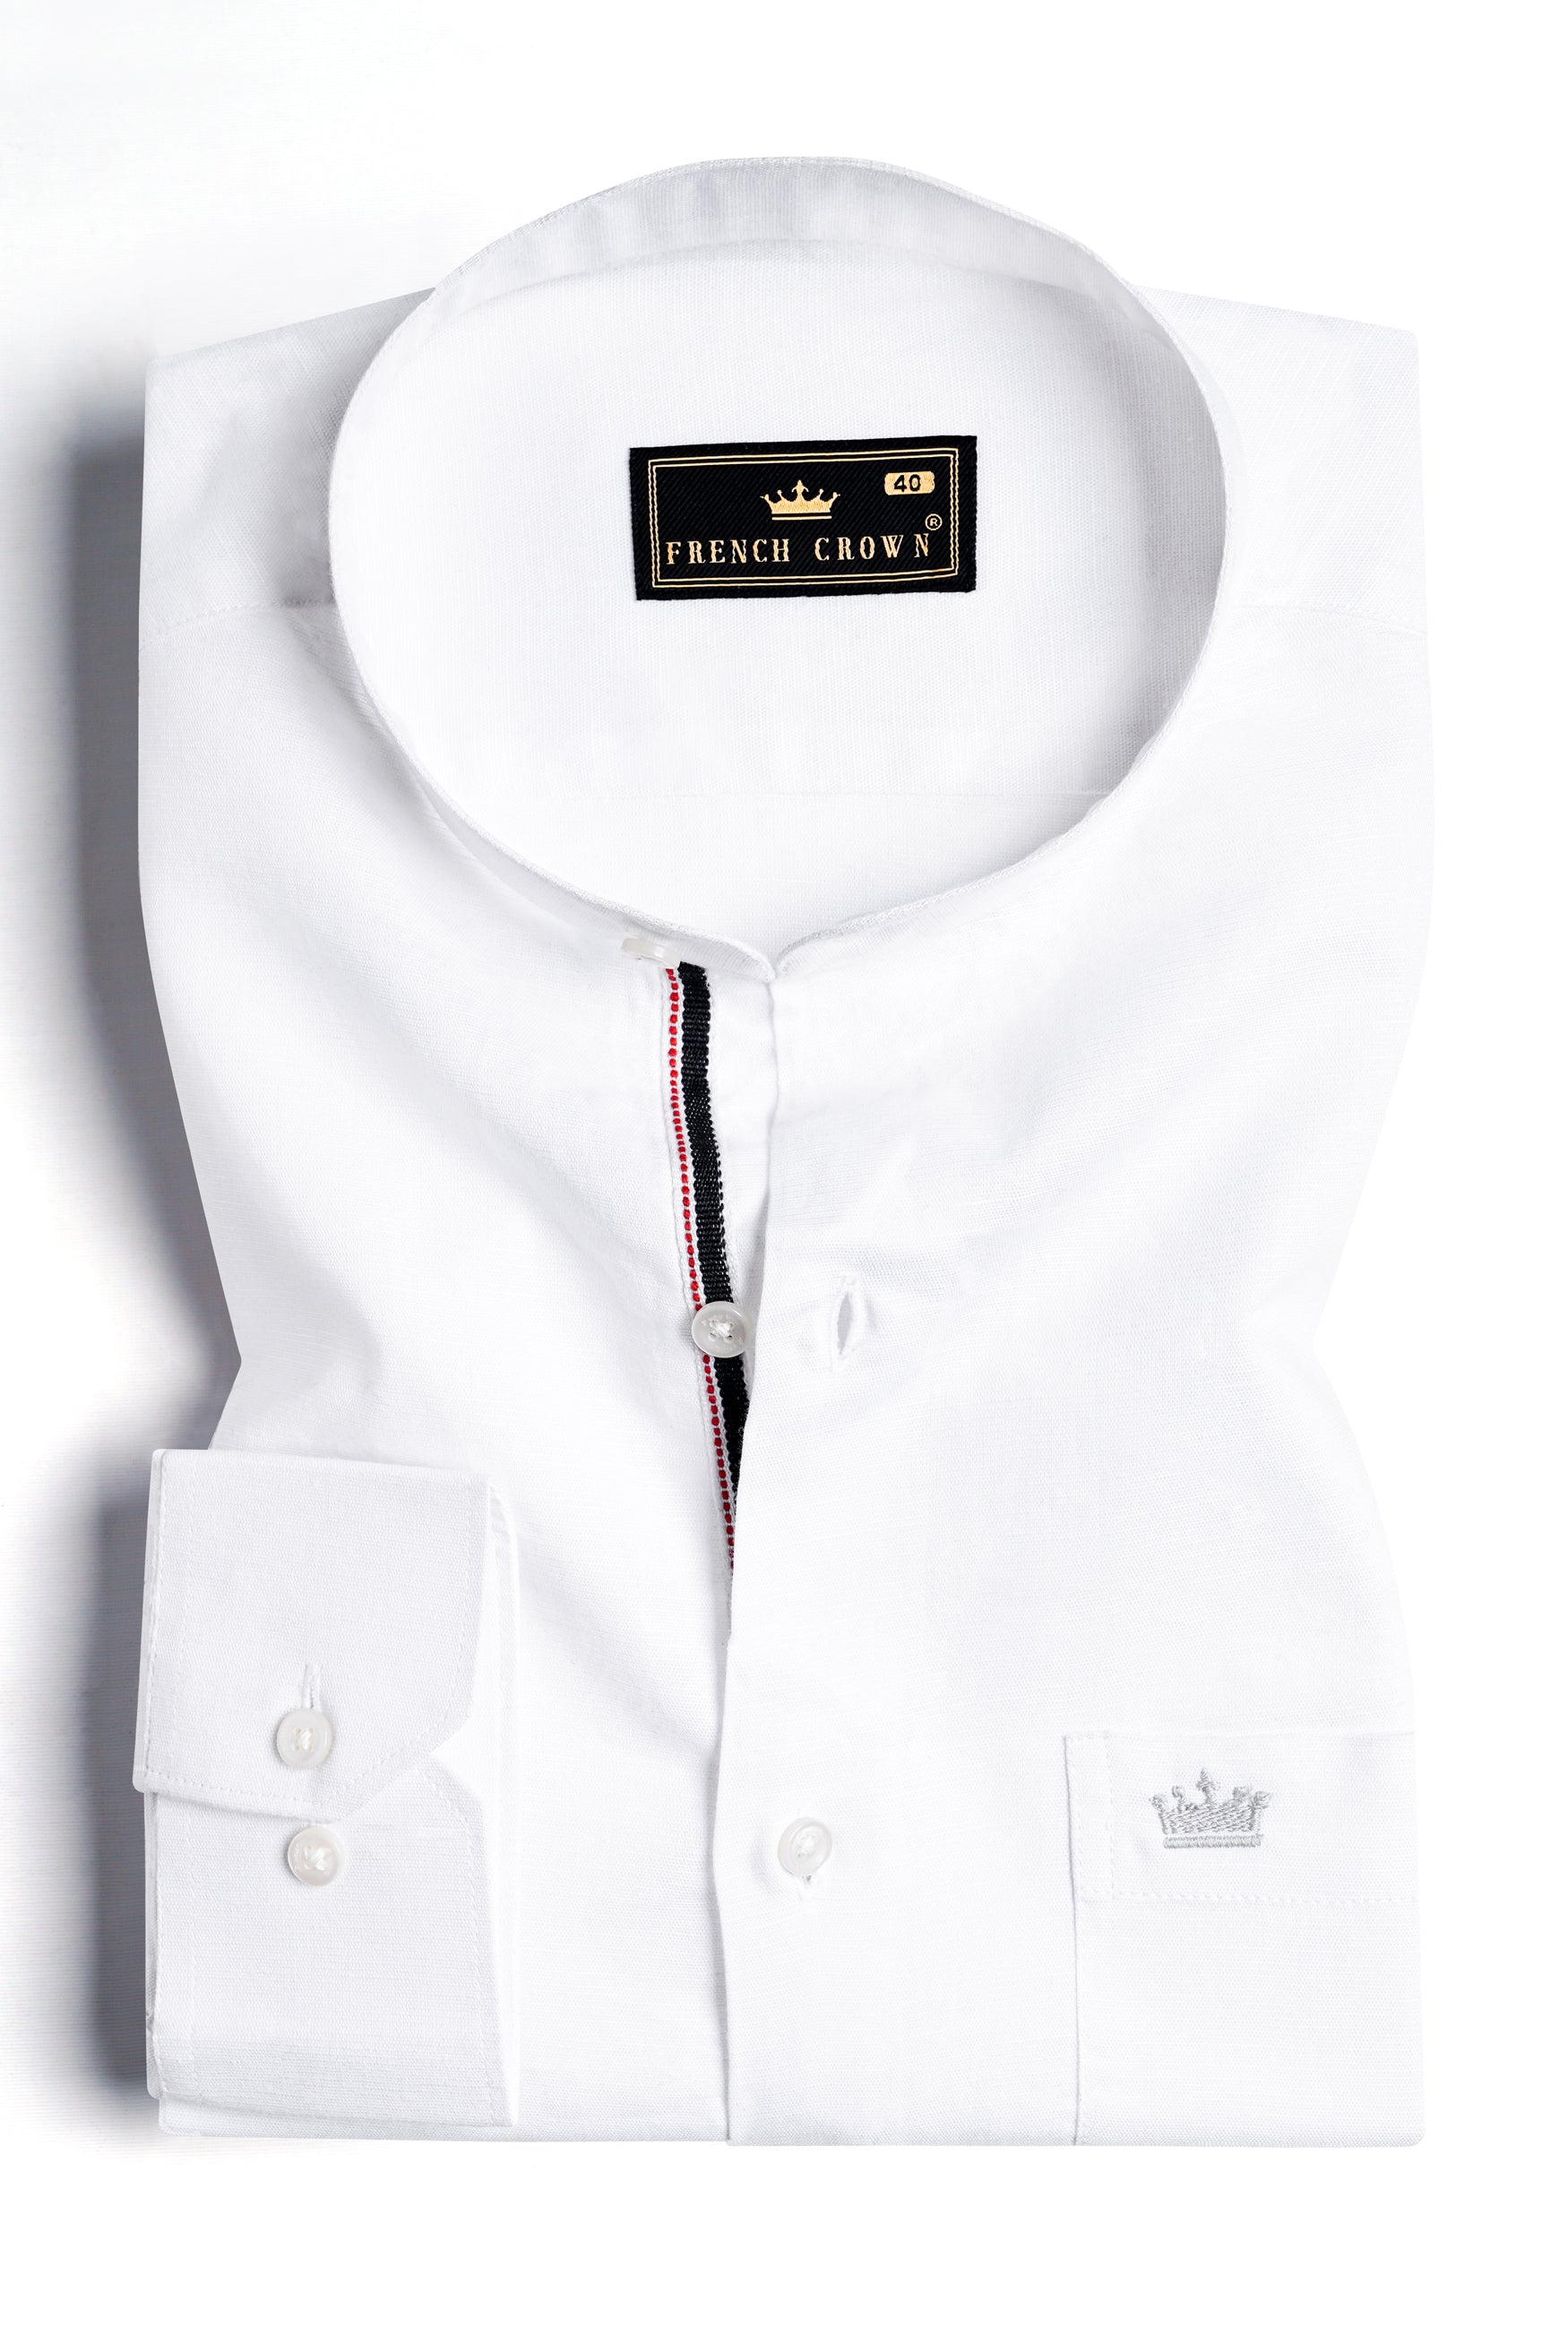 Snow White Luxurious Linen Shirt.